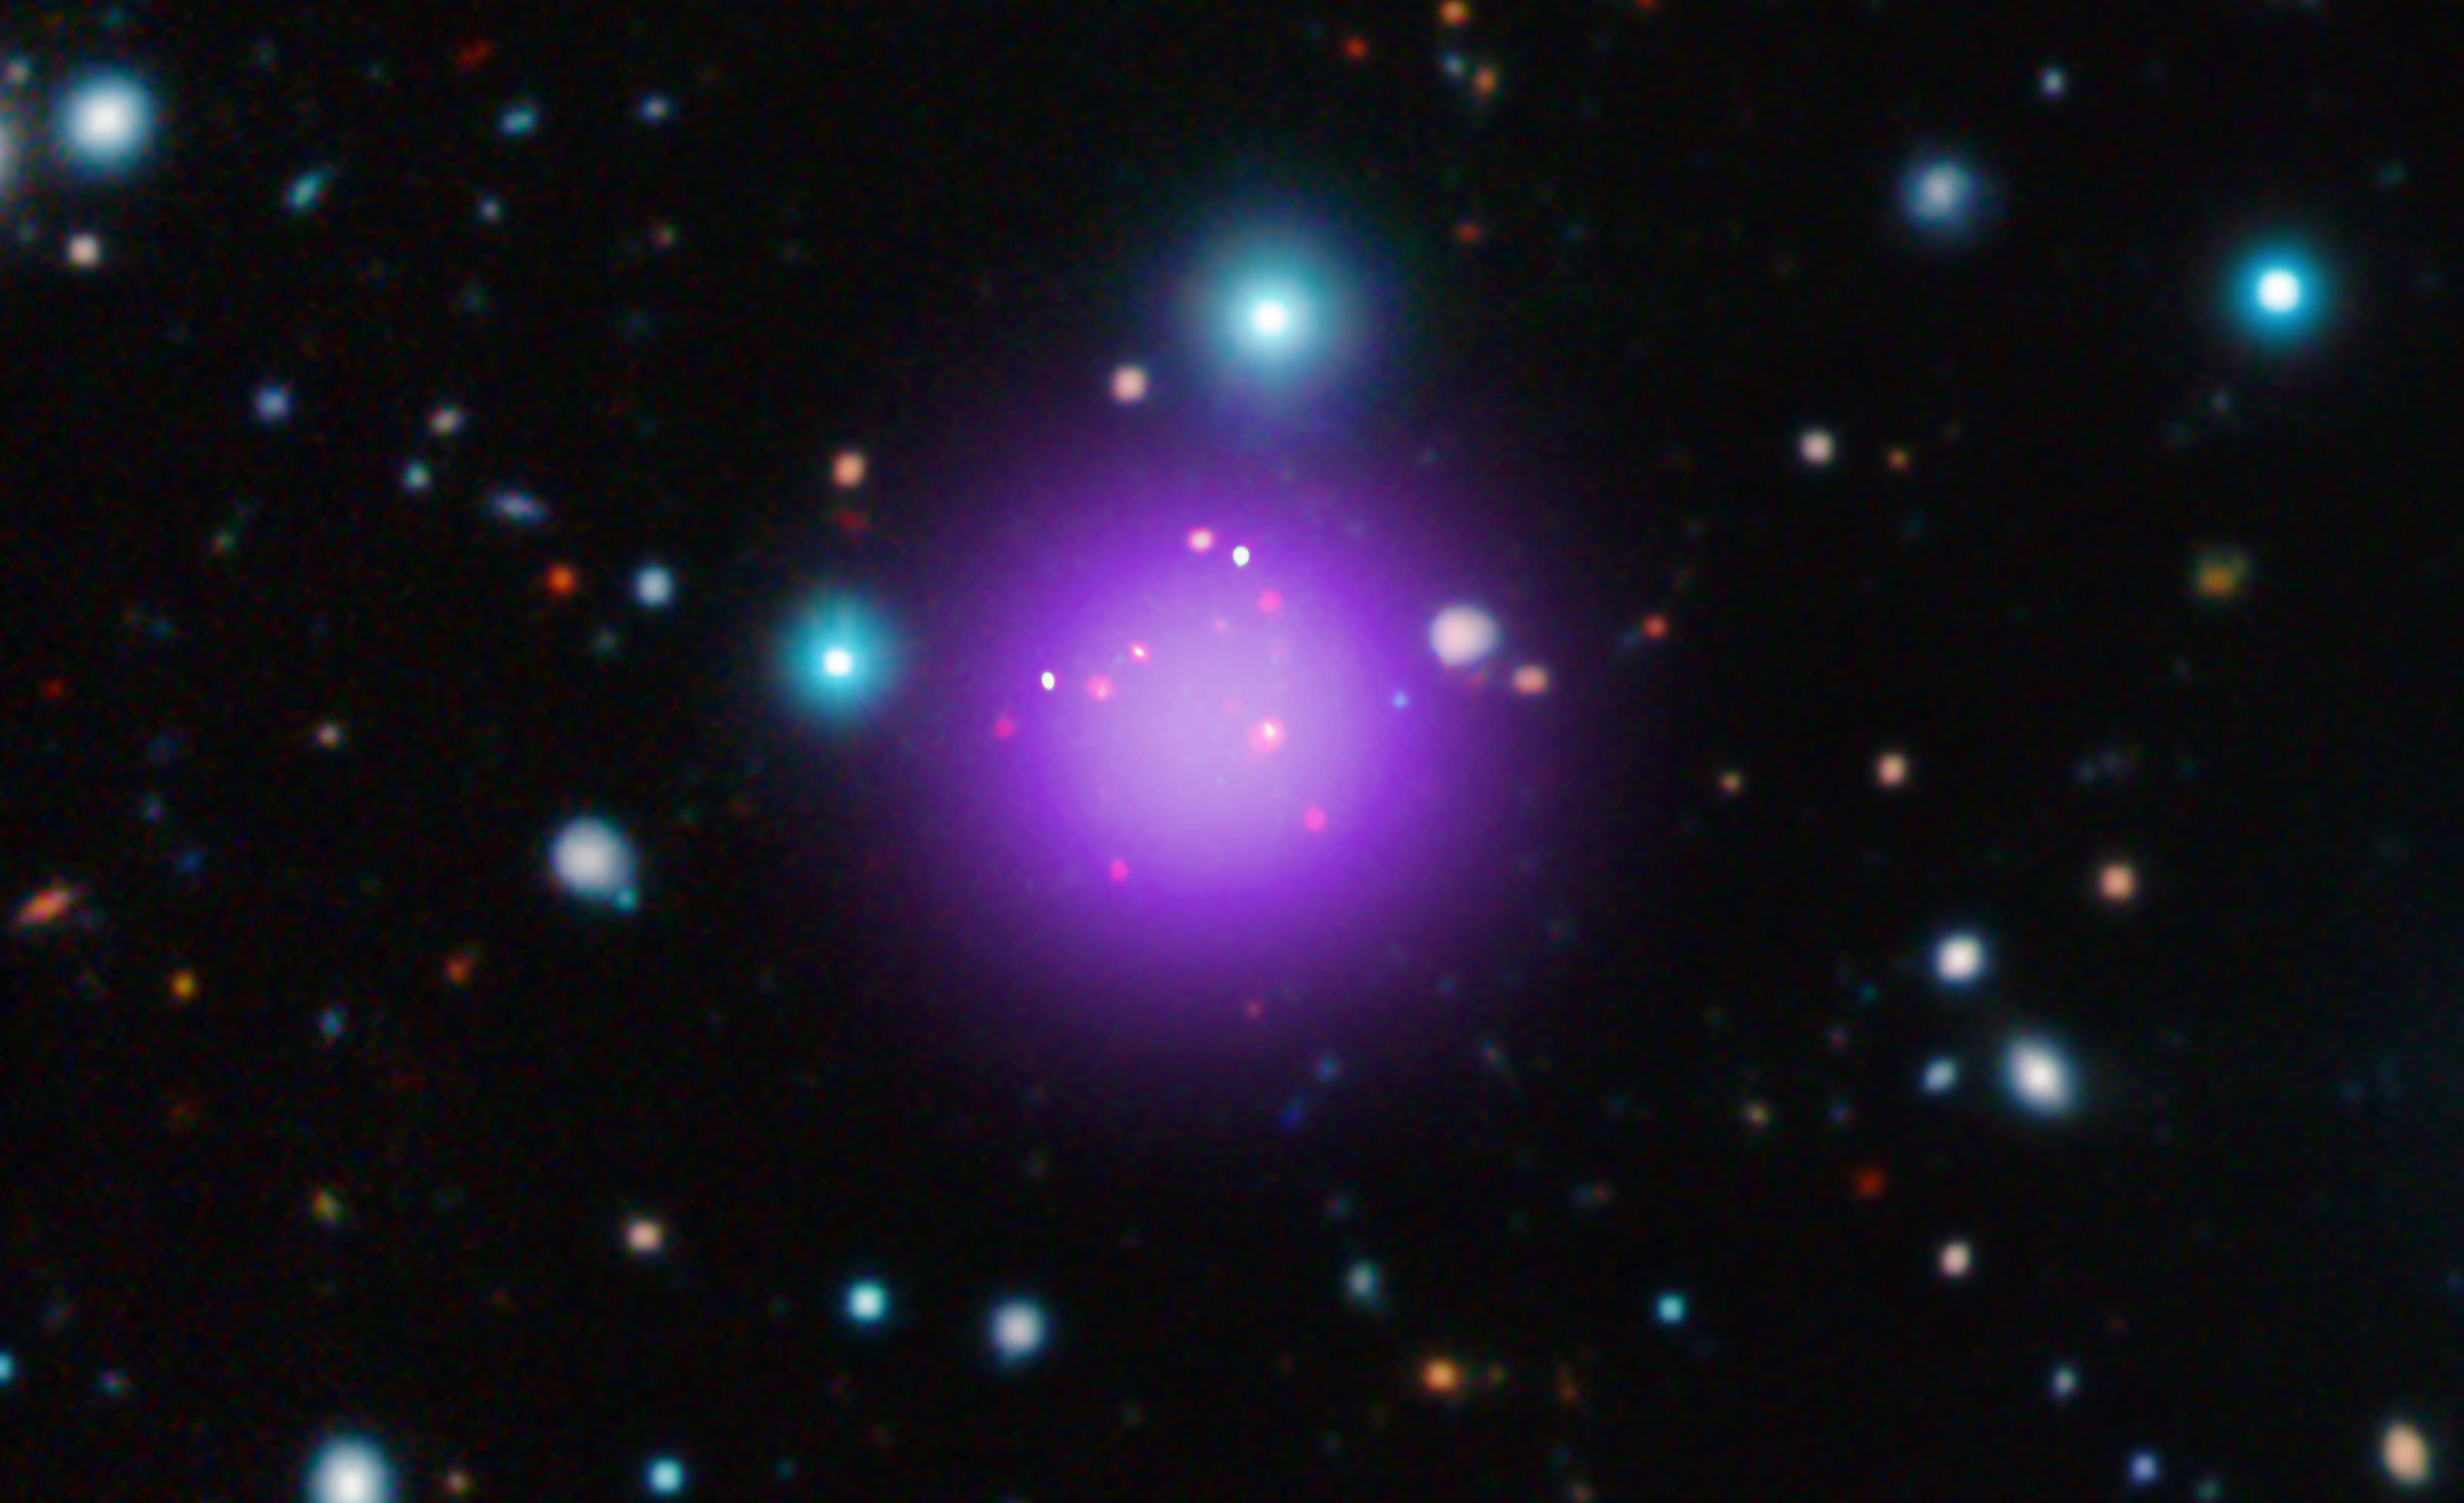 Mature galaxy cluster CL J1001